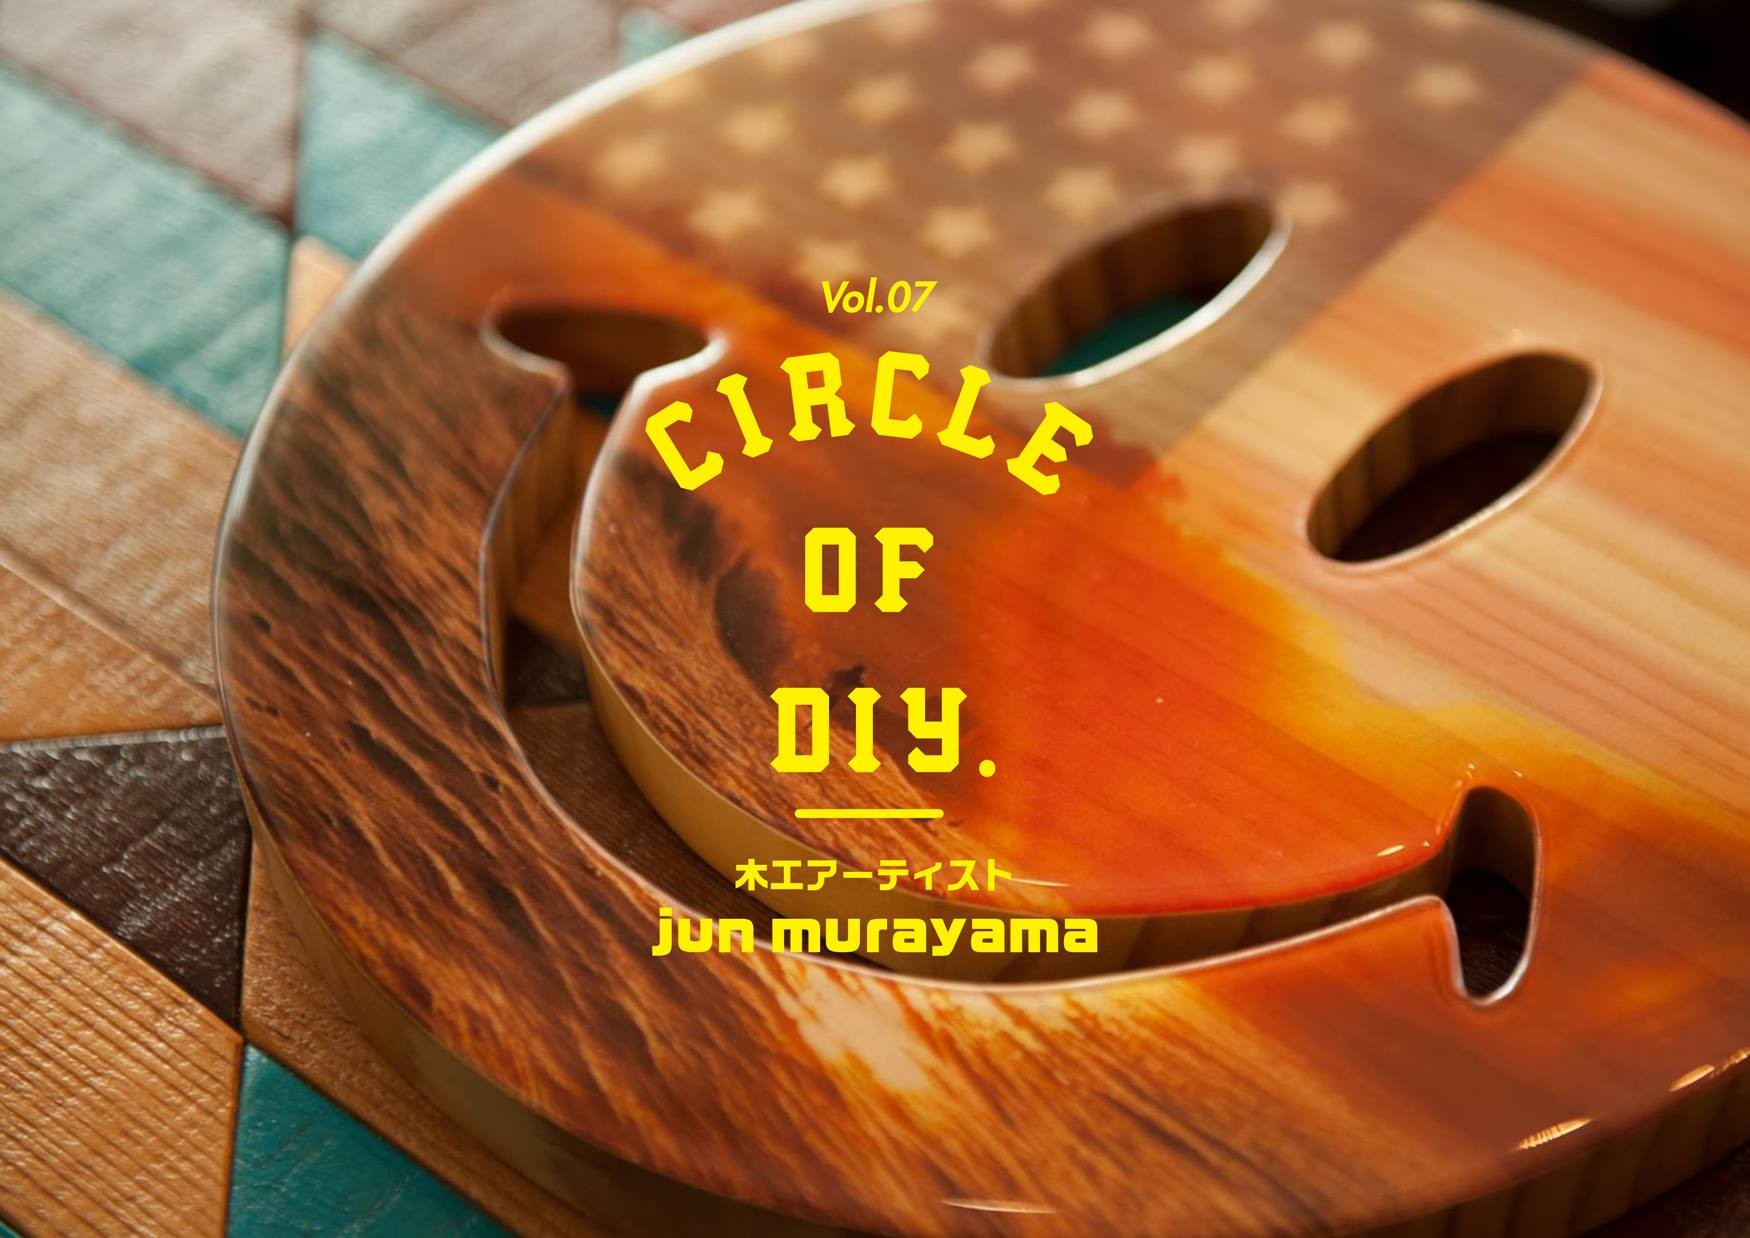 jun murayama ウッドスピーカー jm-surf-商品の画像